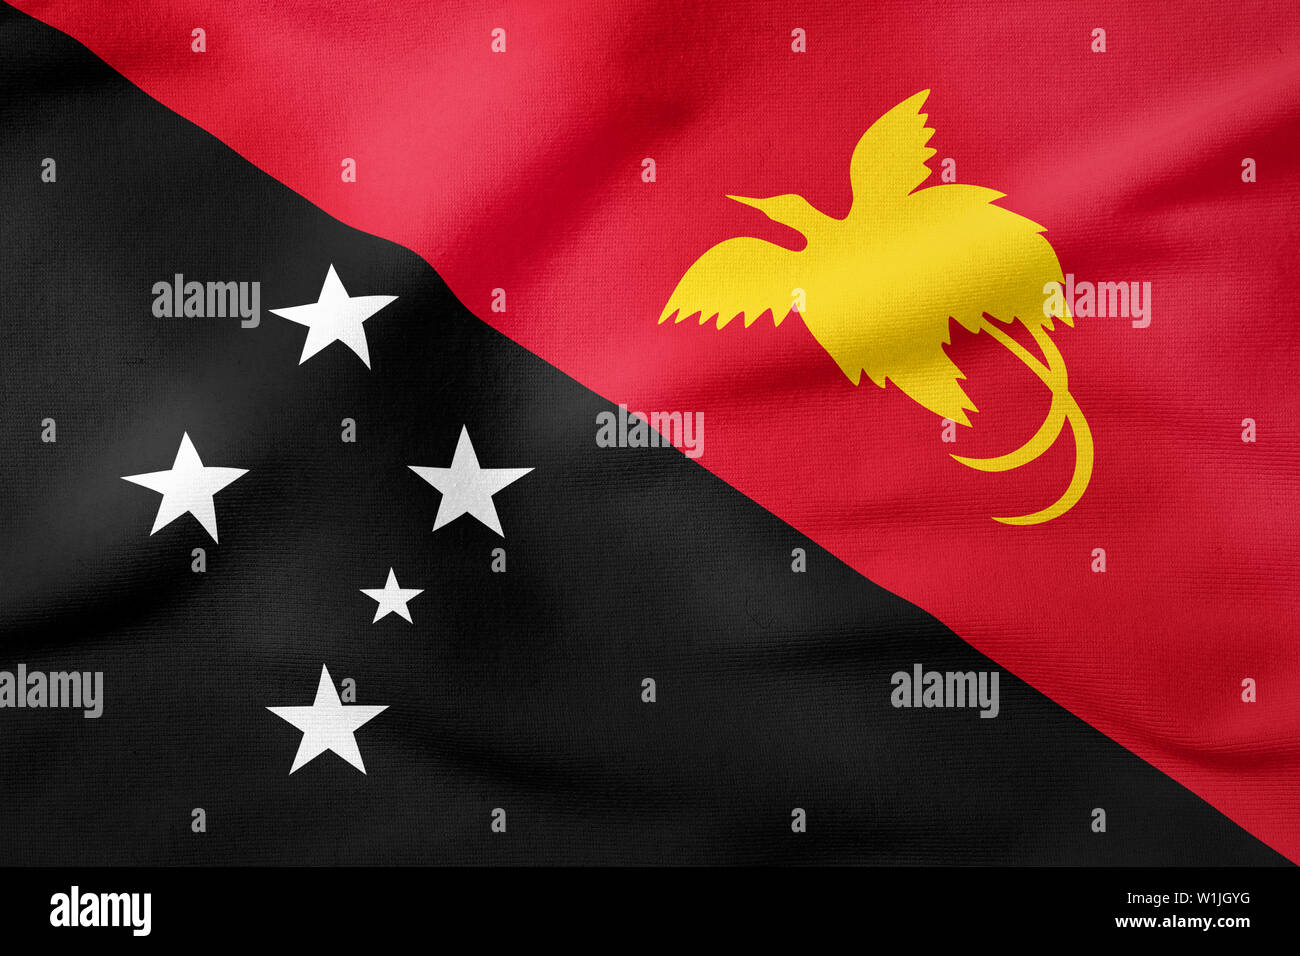 National Flag of Papua New Guinea - Rectangular Shape patriotic symbol Stock Photo